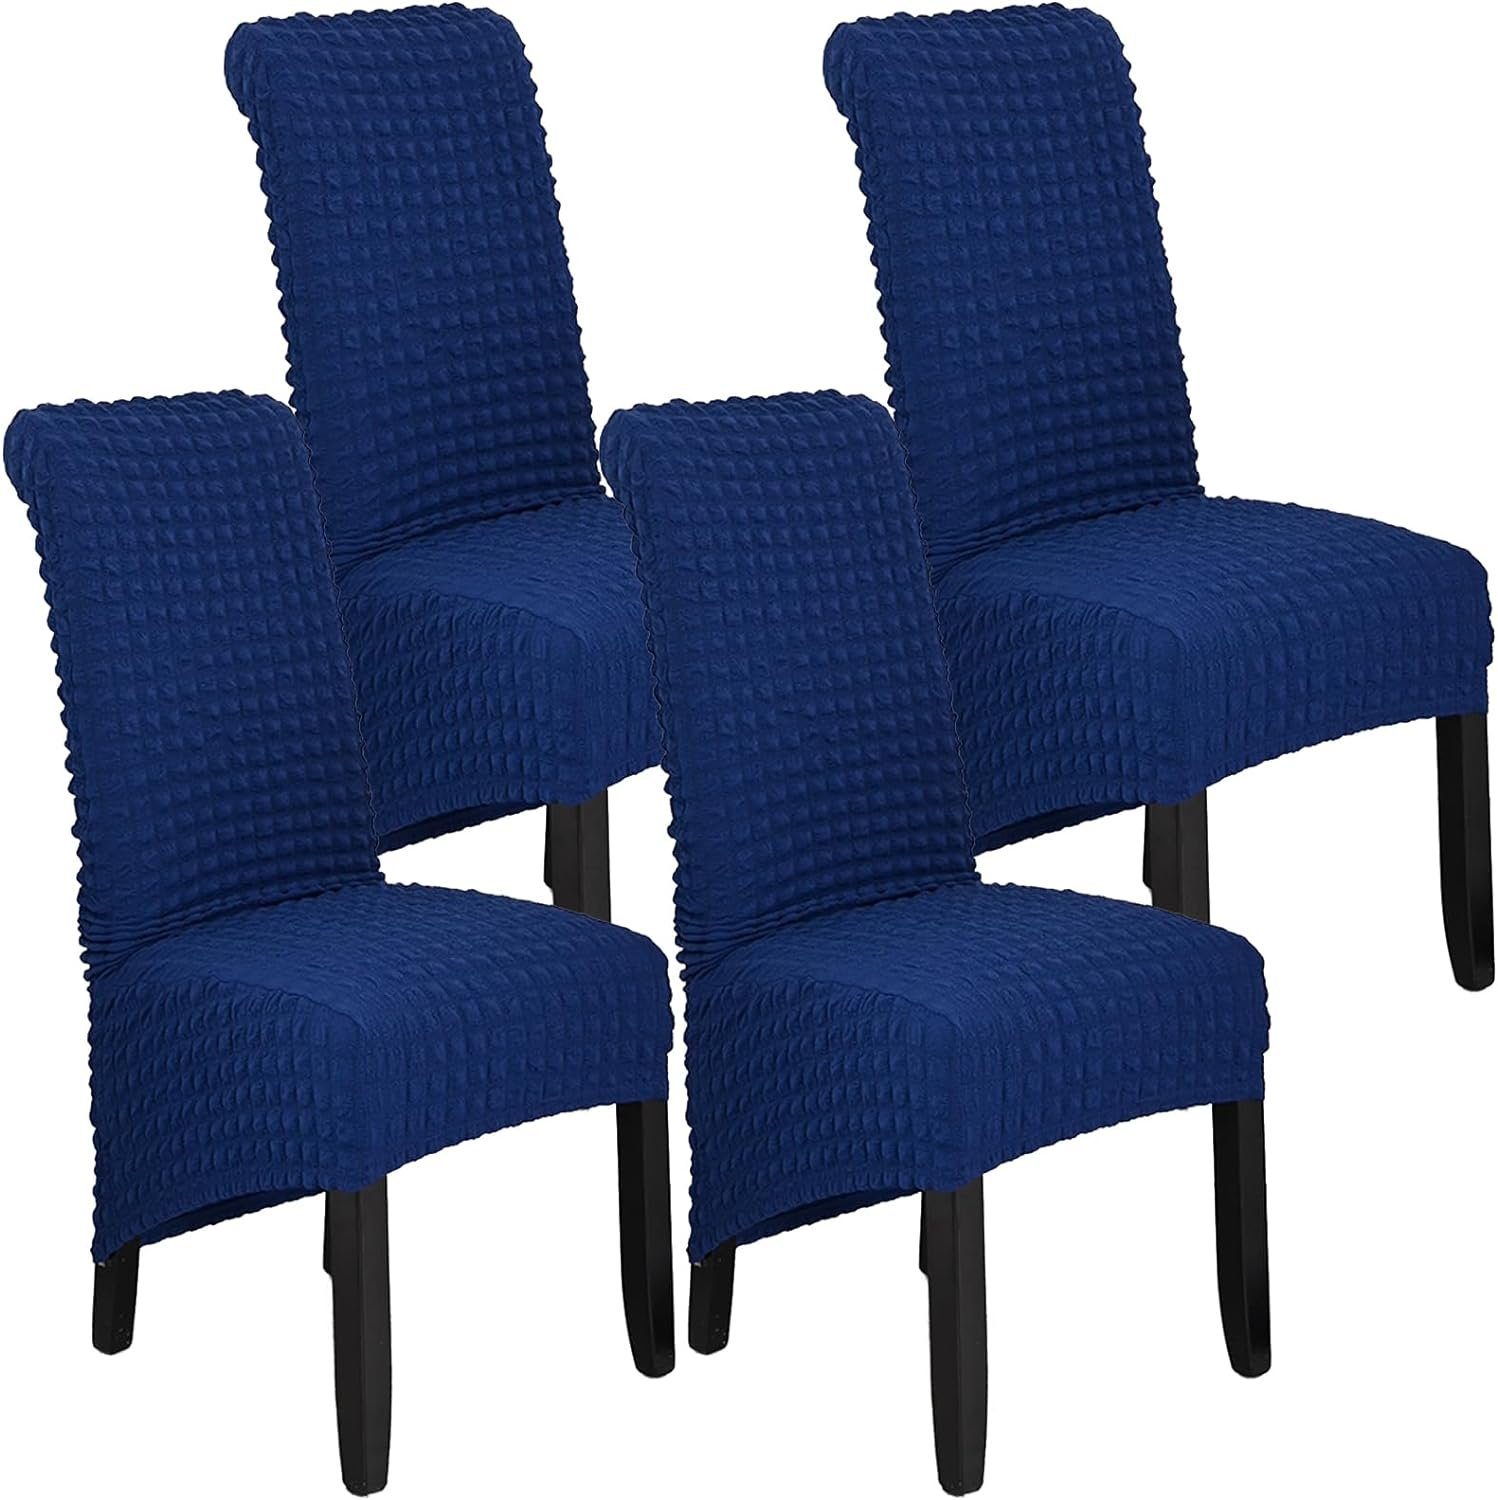 Stuhlhusse Stuhlhussen Stretch Stuhlbezüge Universal Abnehmbarer 6 Stück Blau, UE Stock